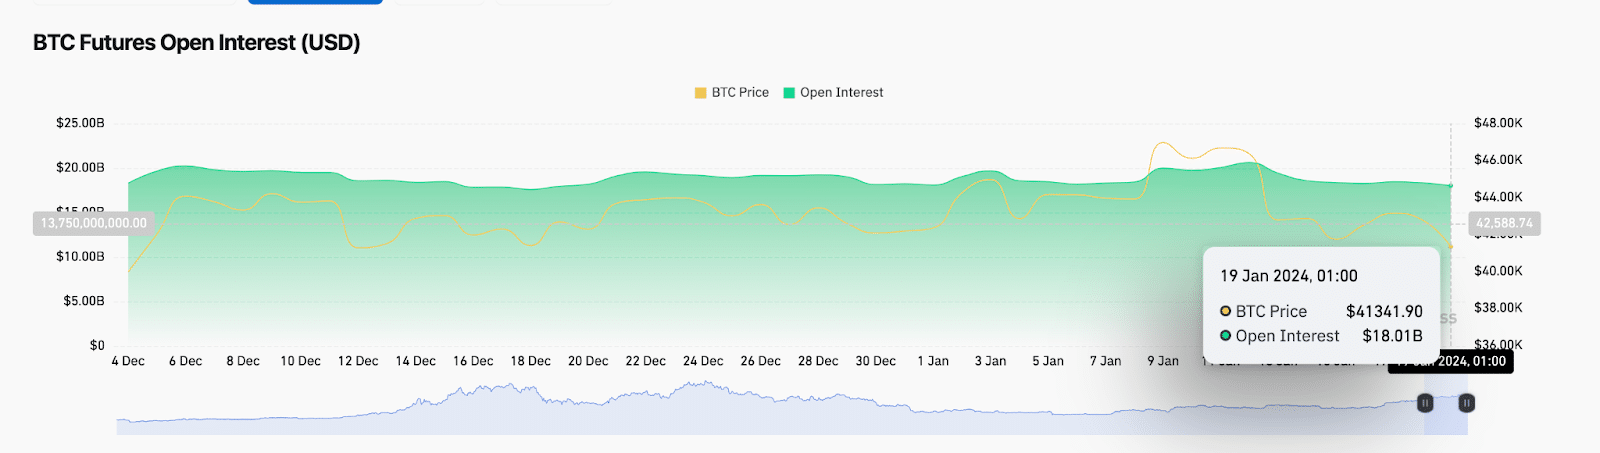 Bitcoin (BTC) Open Interest vs Price, Jan 19, 2024 